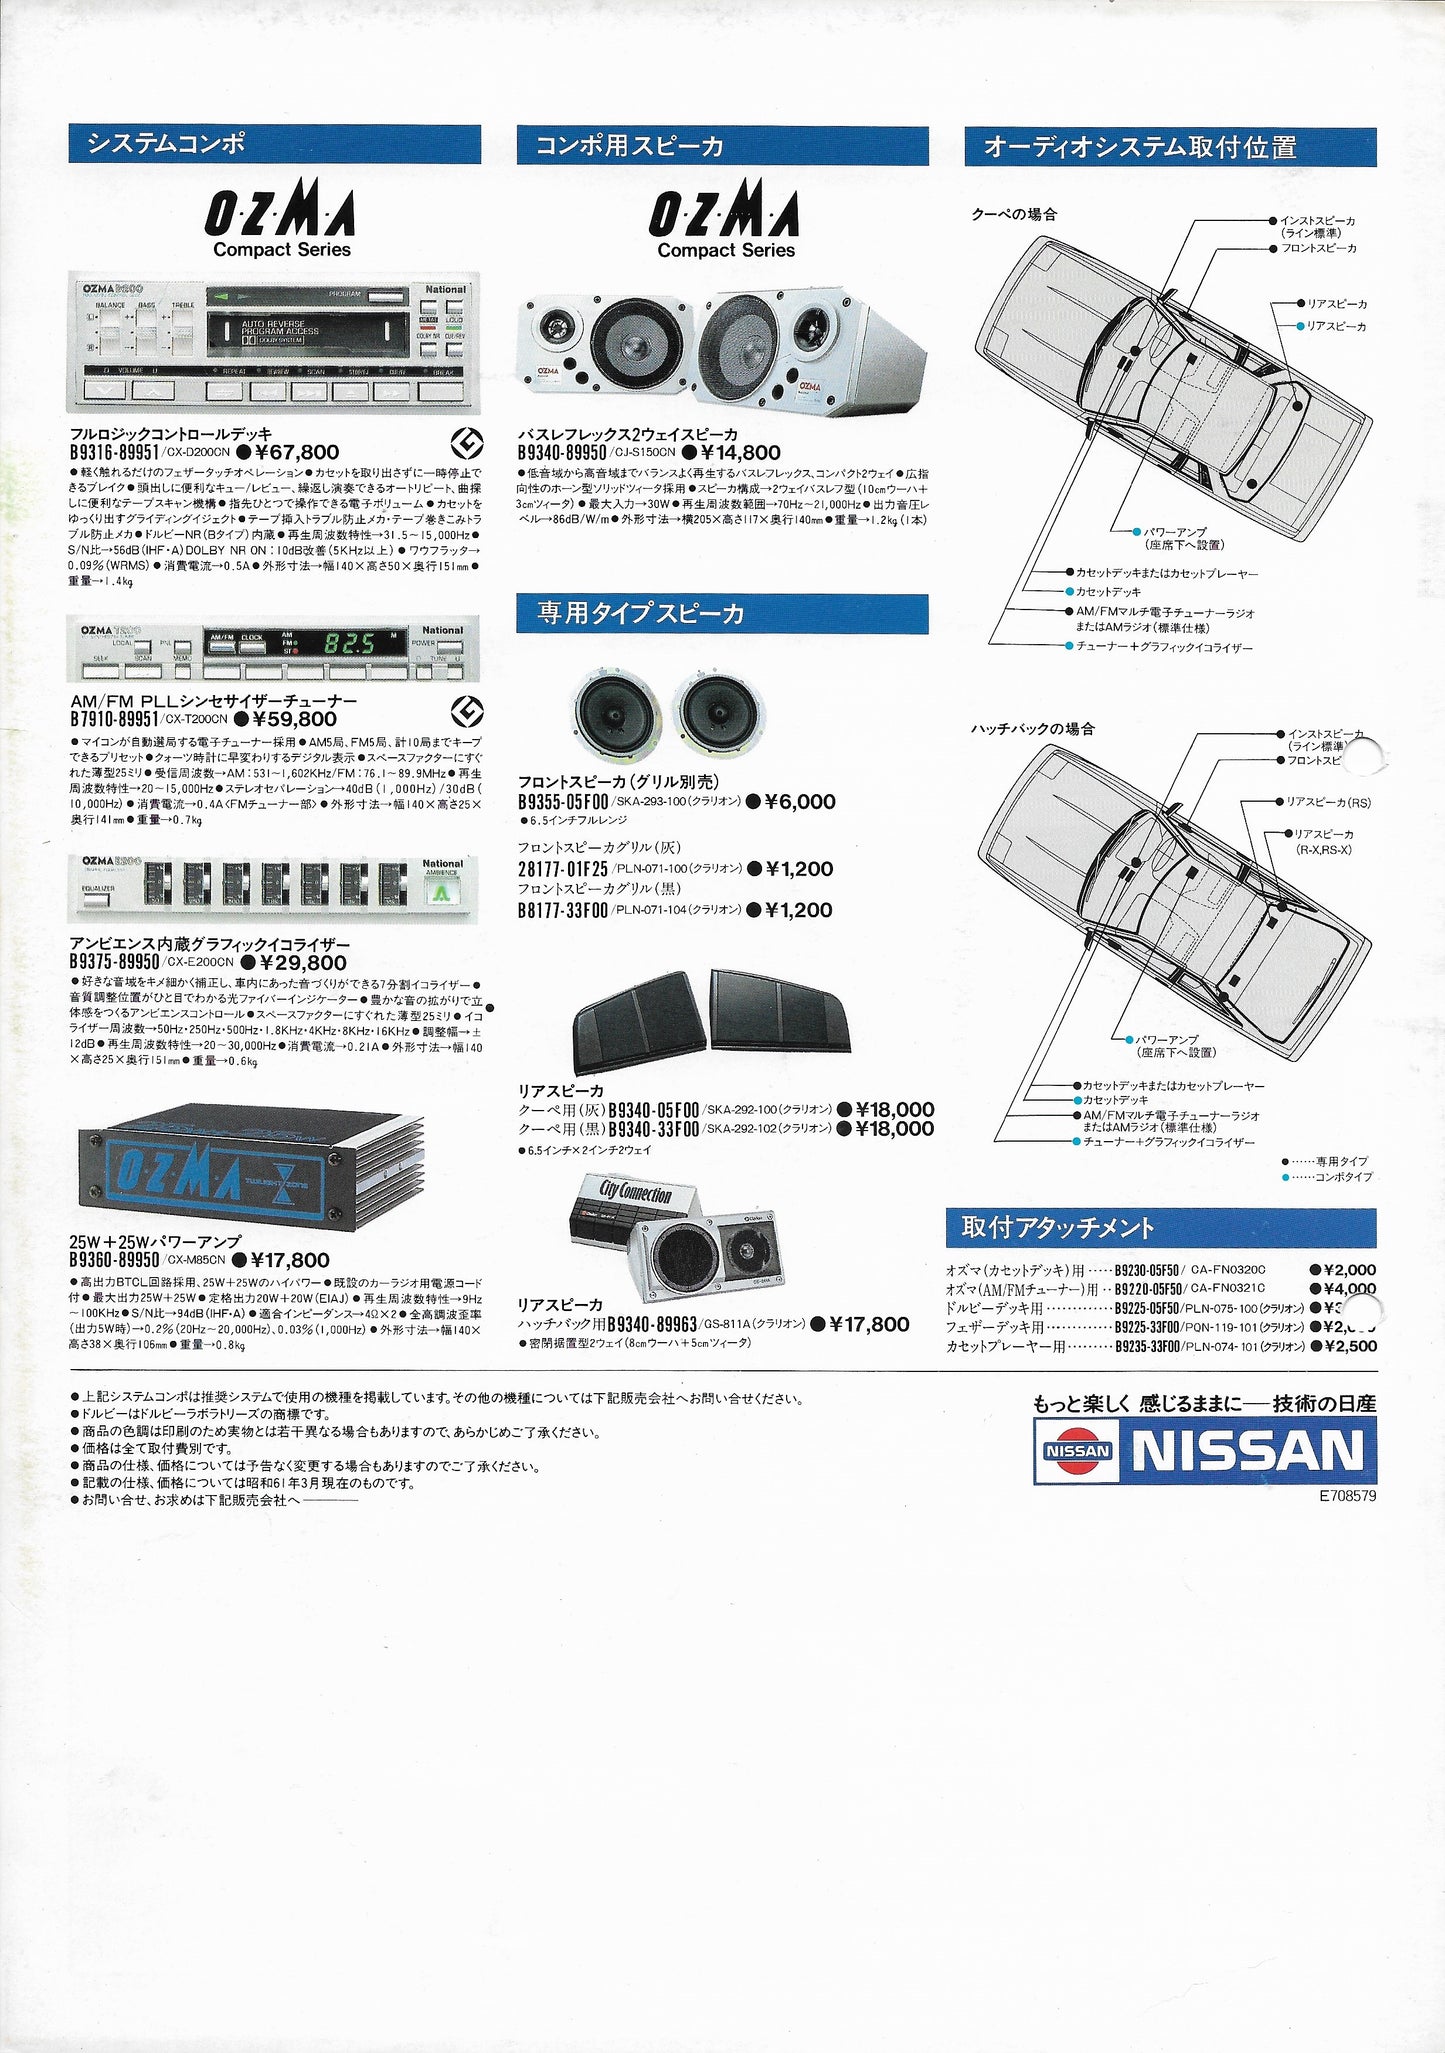 Nissan Silvia S12 Audio System Catalog